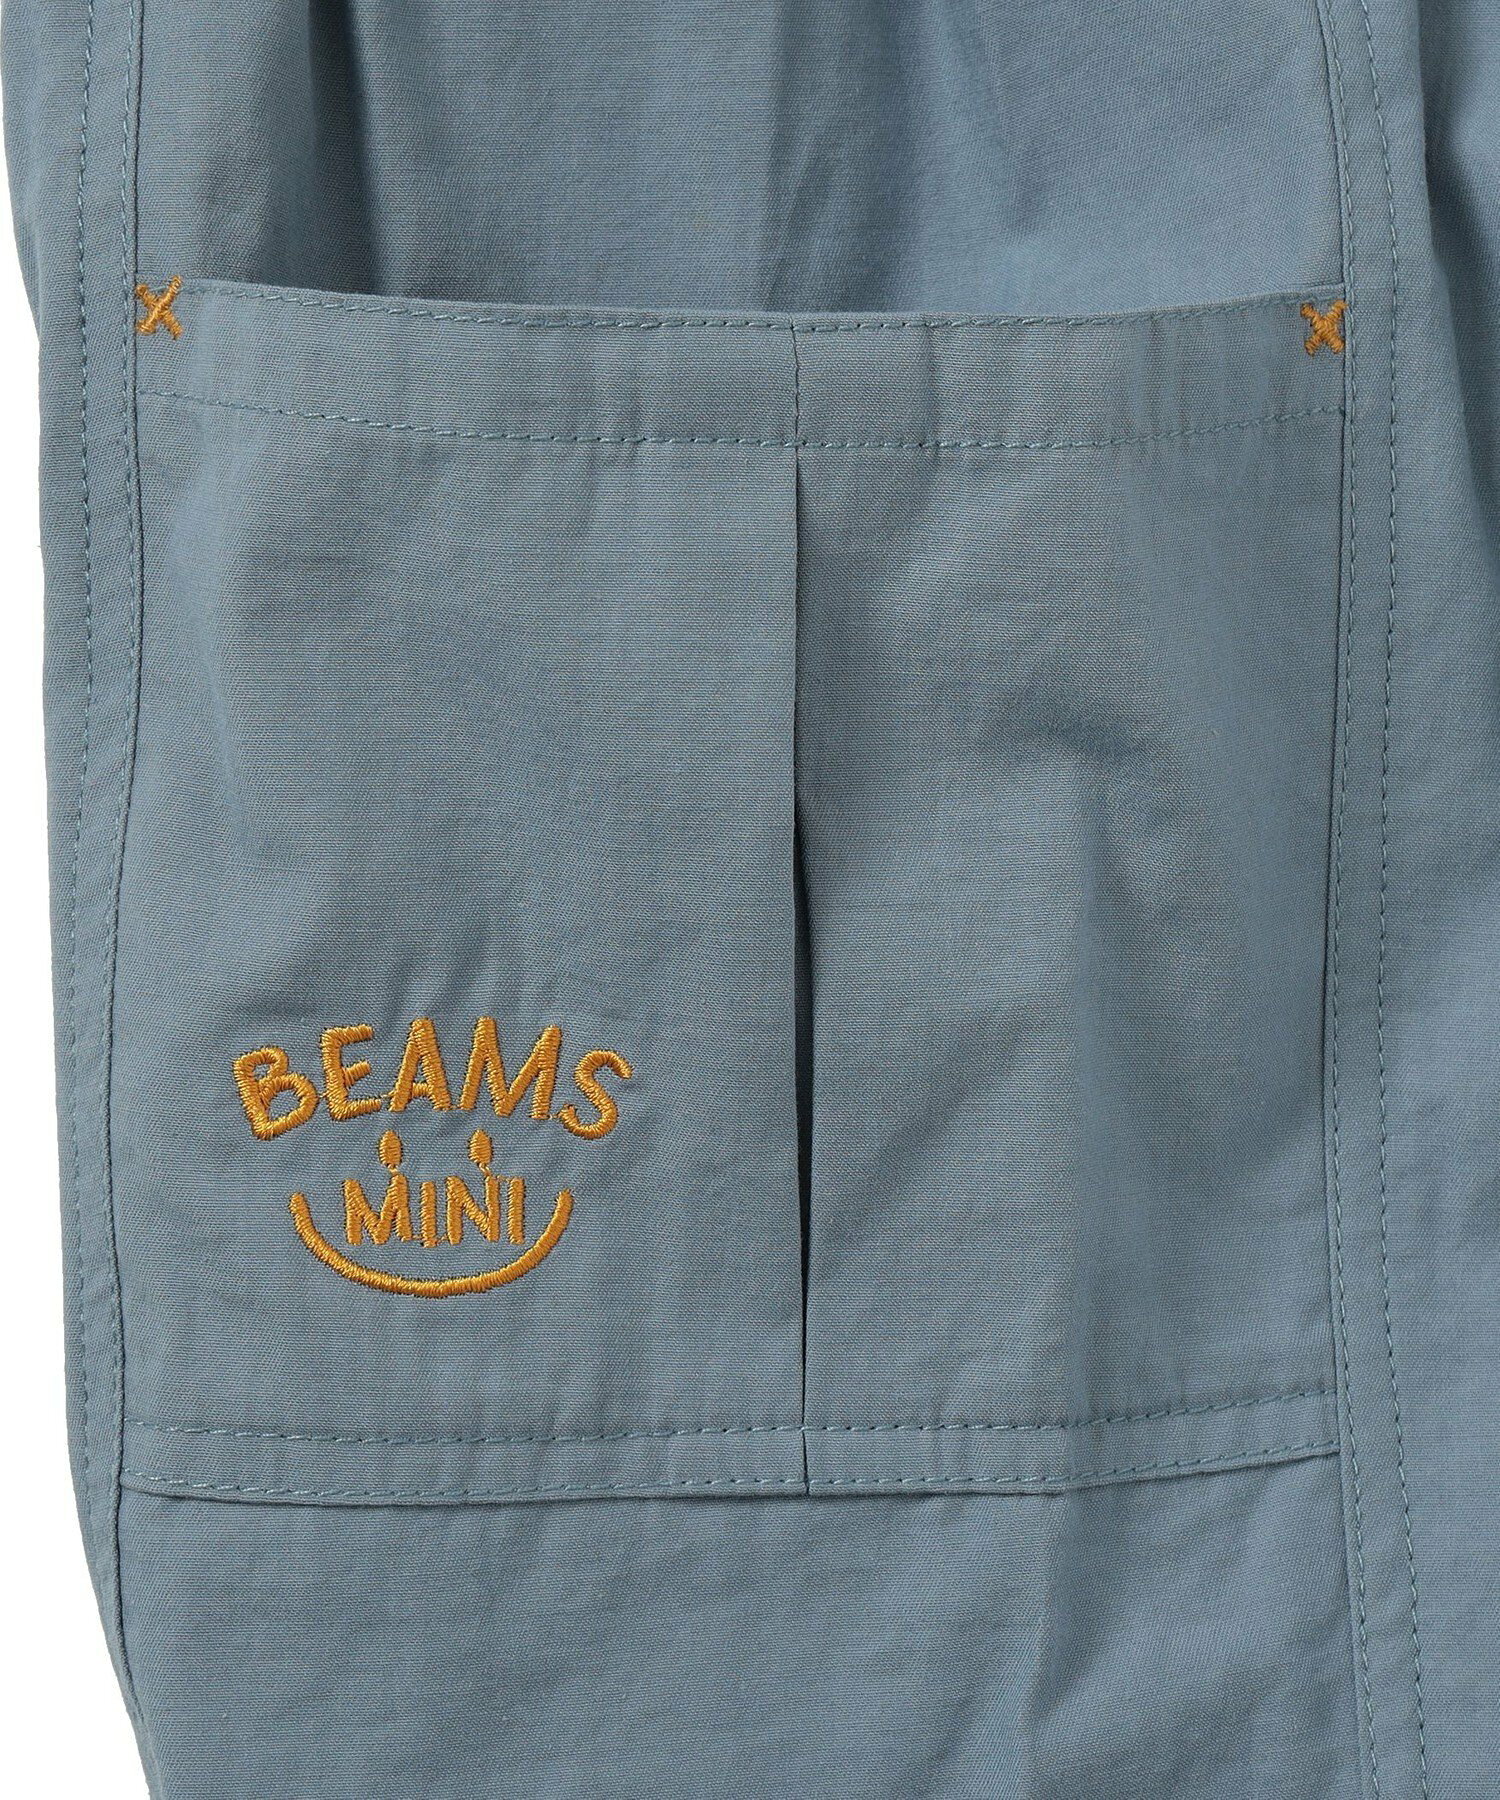 BEAMS mini / スマイル キャンプショーツ 22S(90~150cm)